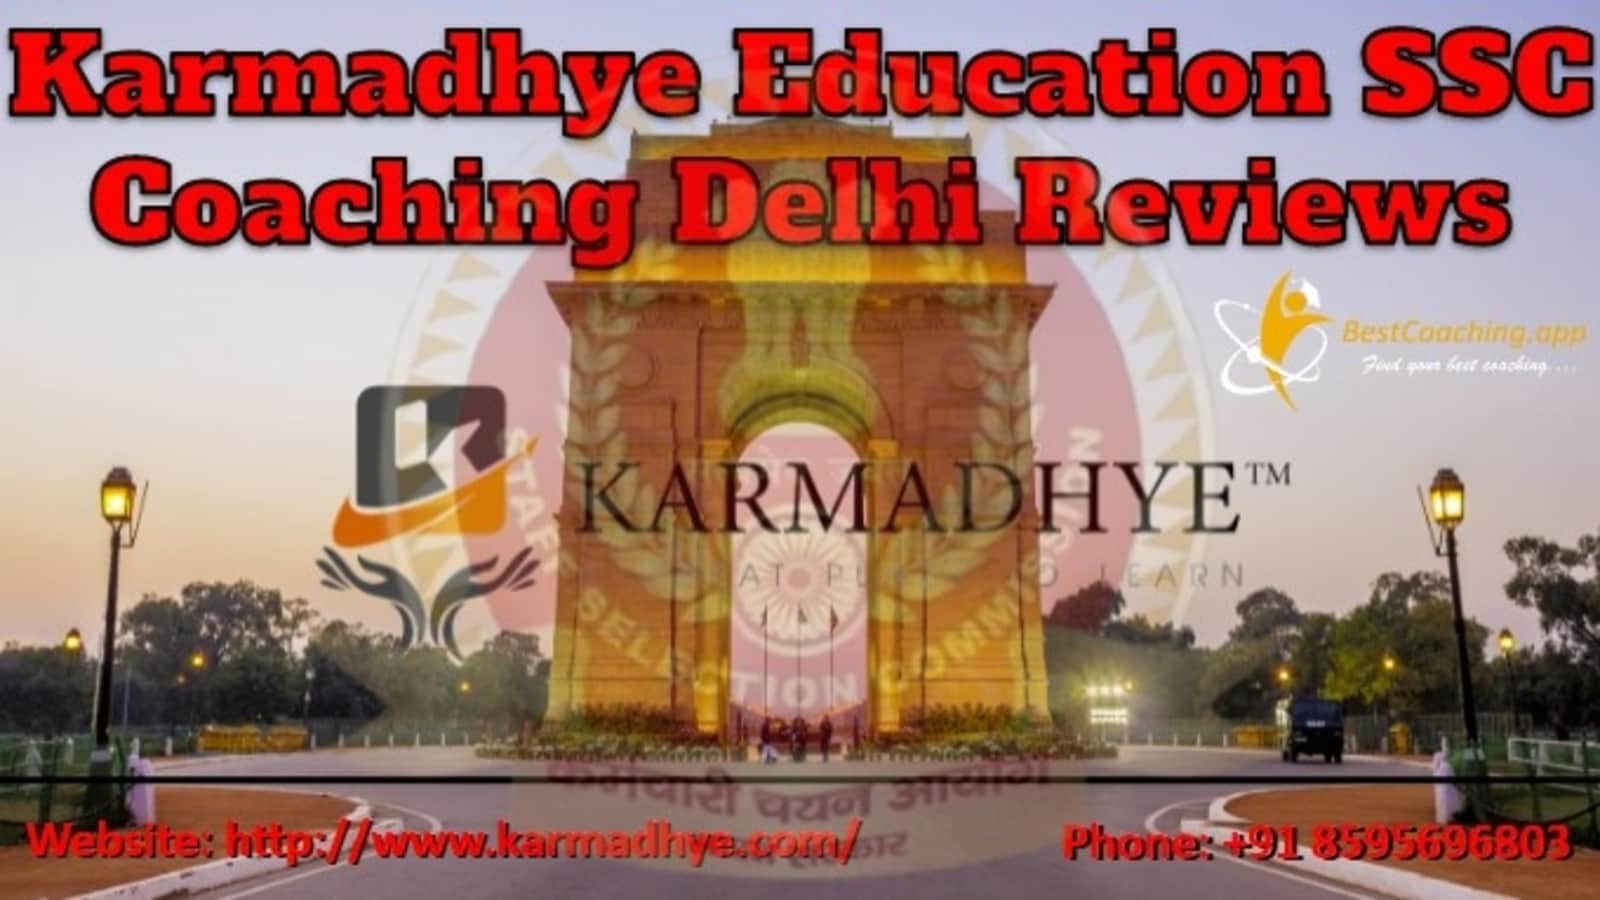 Karmadhye Education SSC Coaching in Delhi